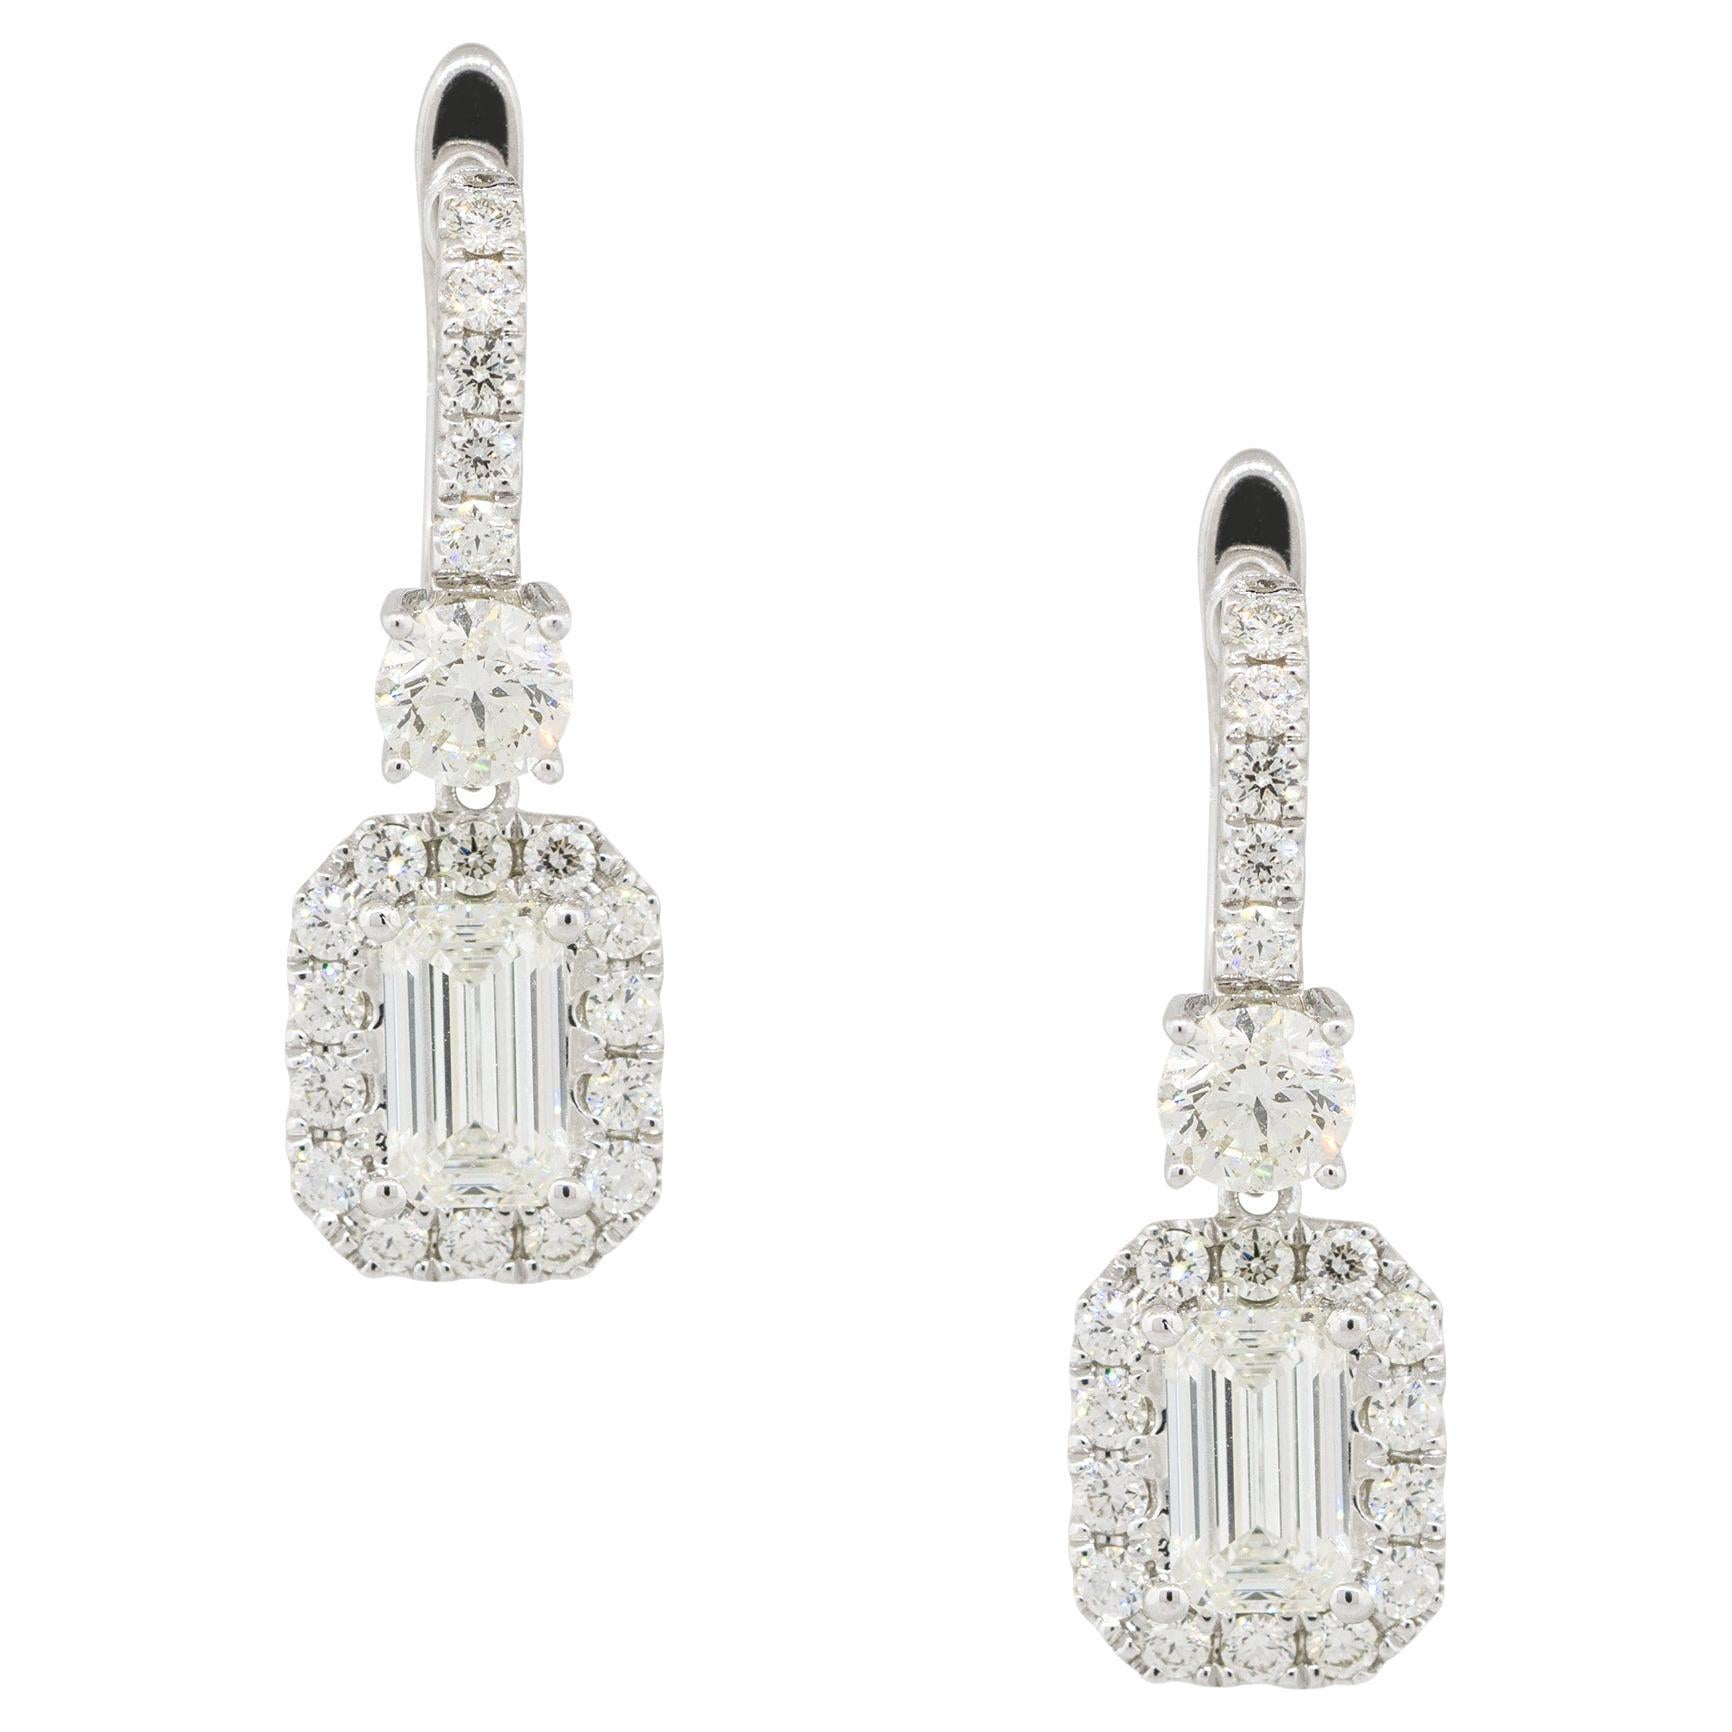 5.38 Carat Diamond Pave Cluster Dangle Earrings 18 Karat in Stock